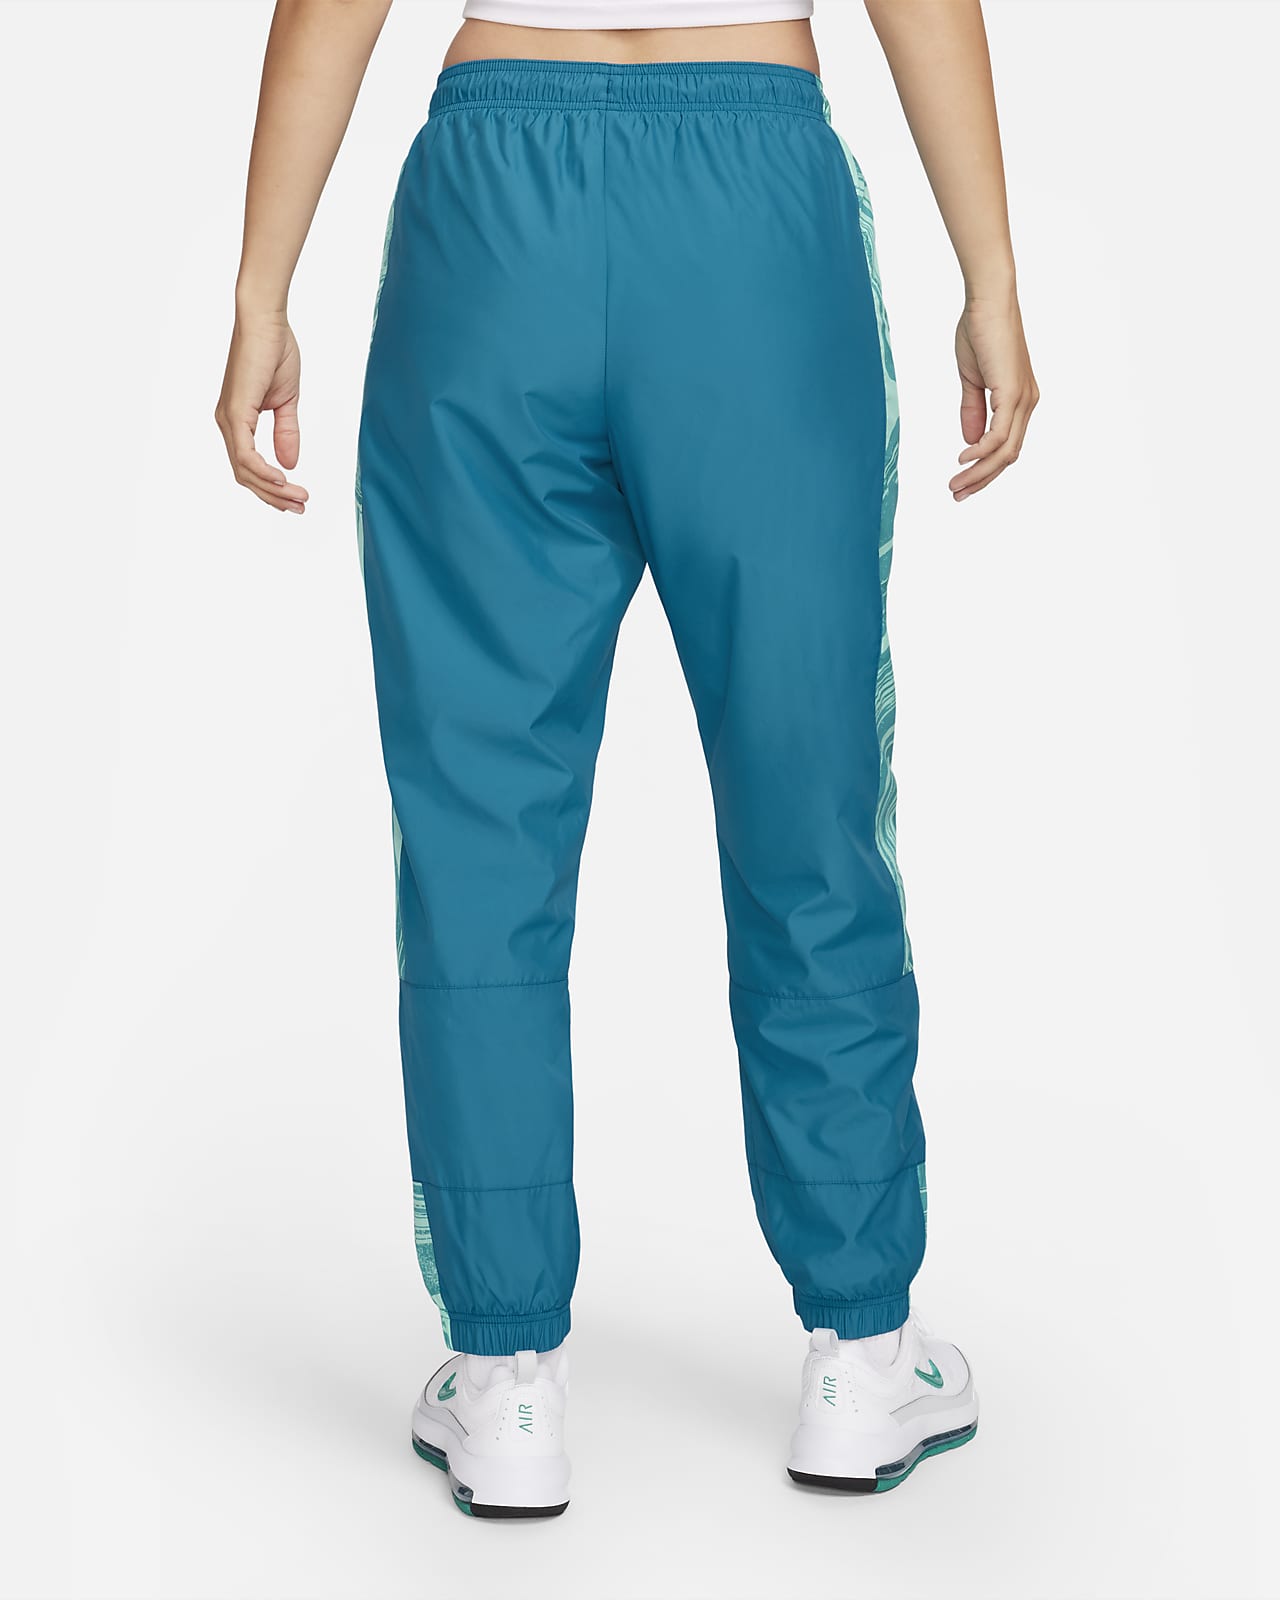 Blue Nike Pants -  Australia